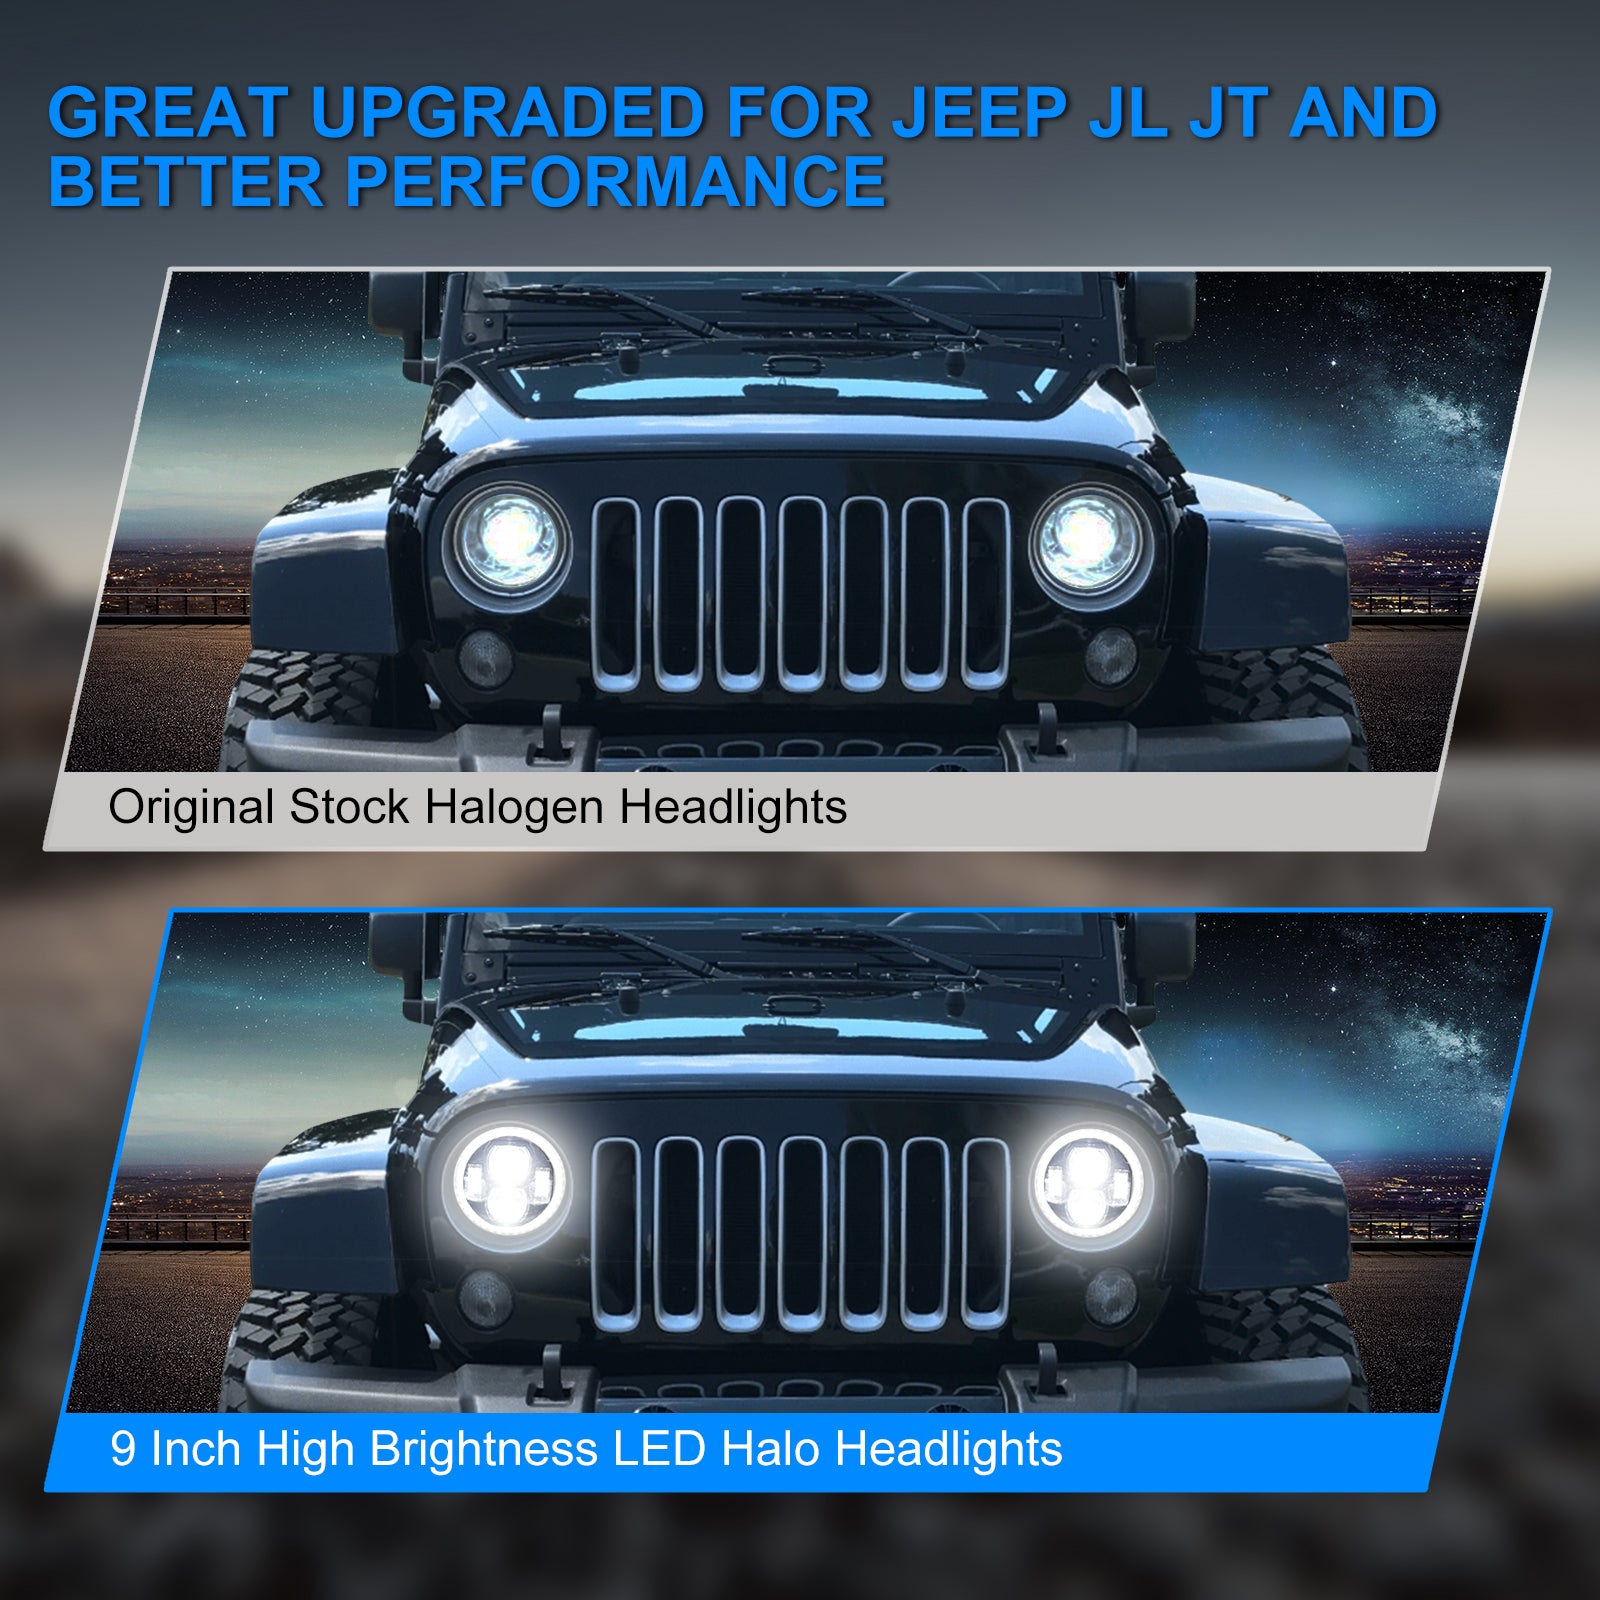 Jeep Gladiator Halo Headlights upgraded